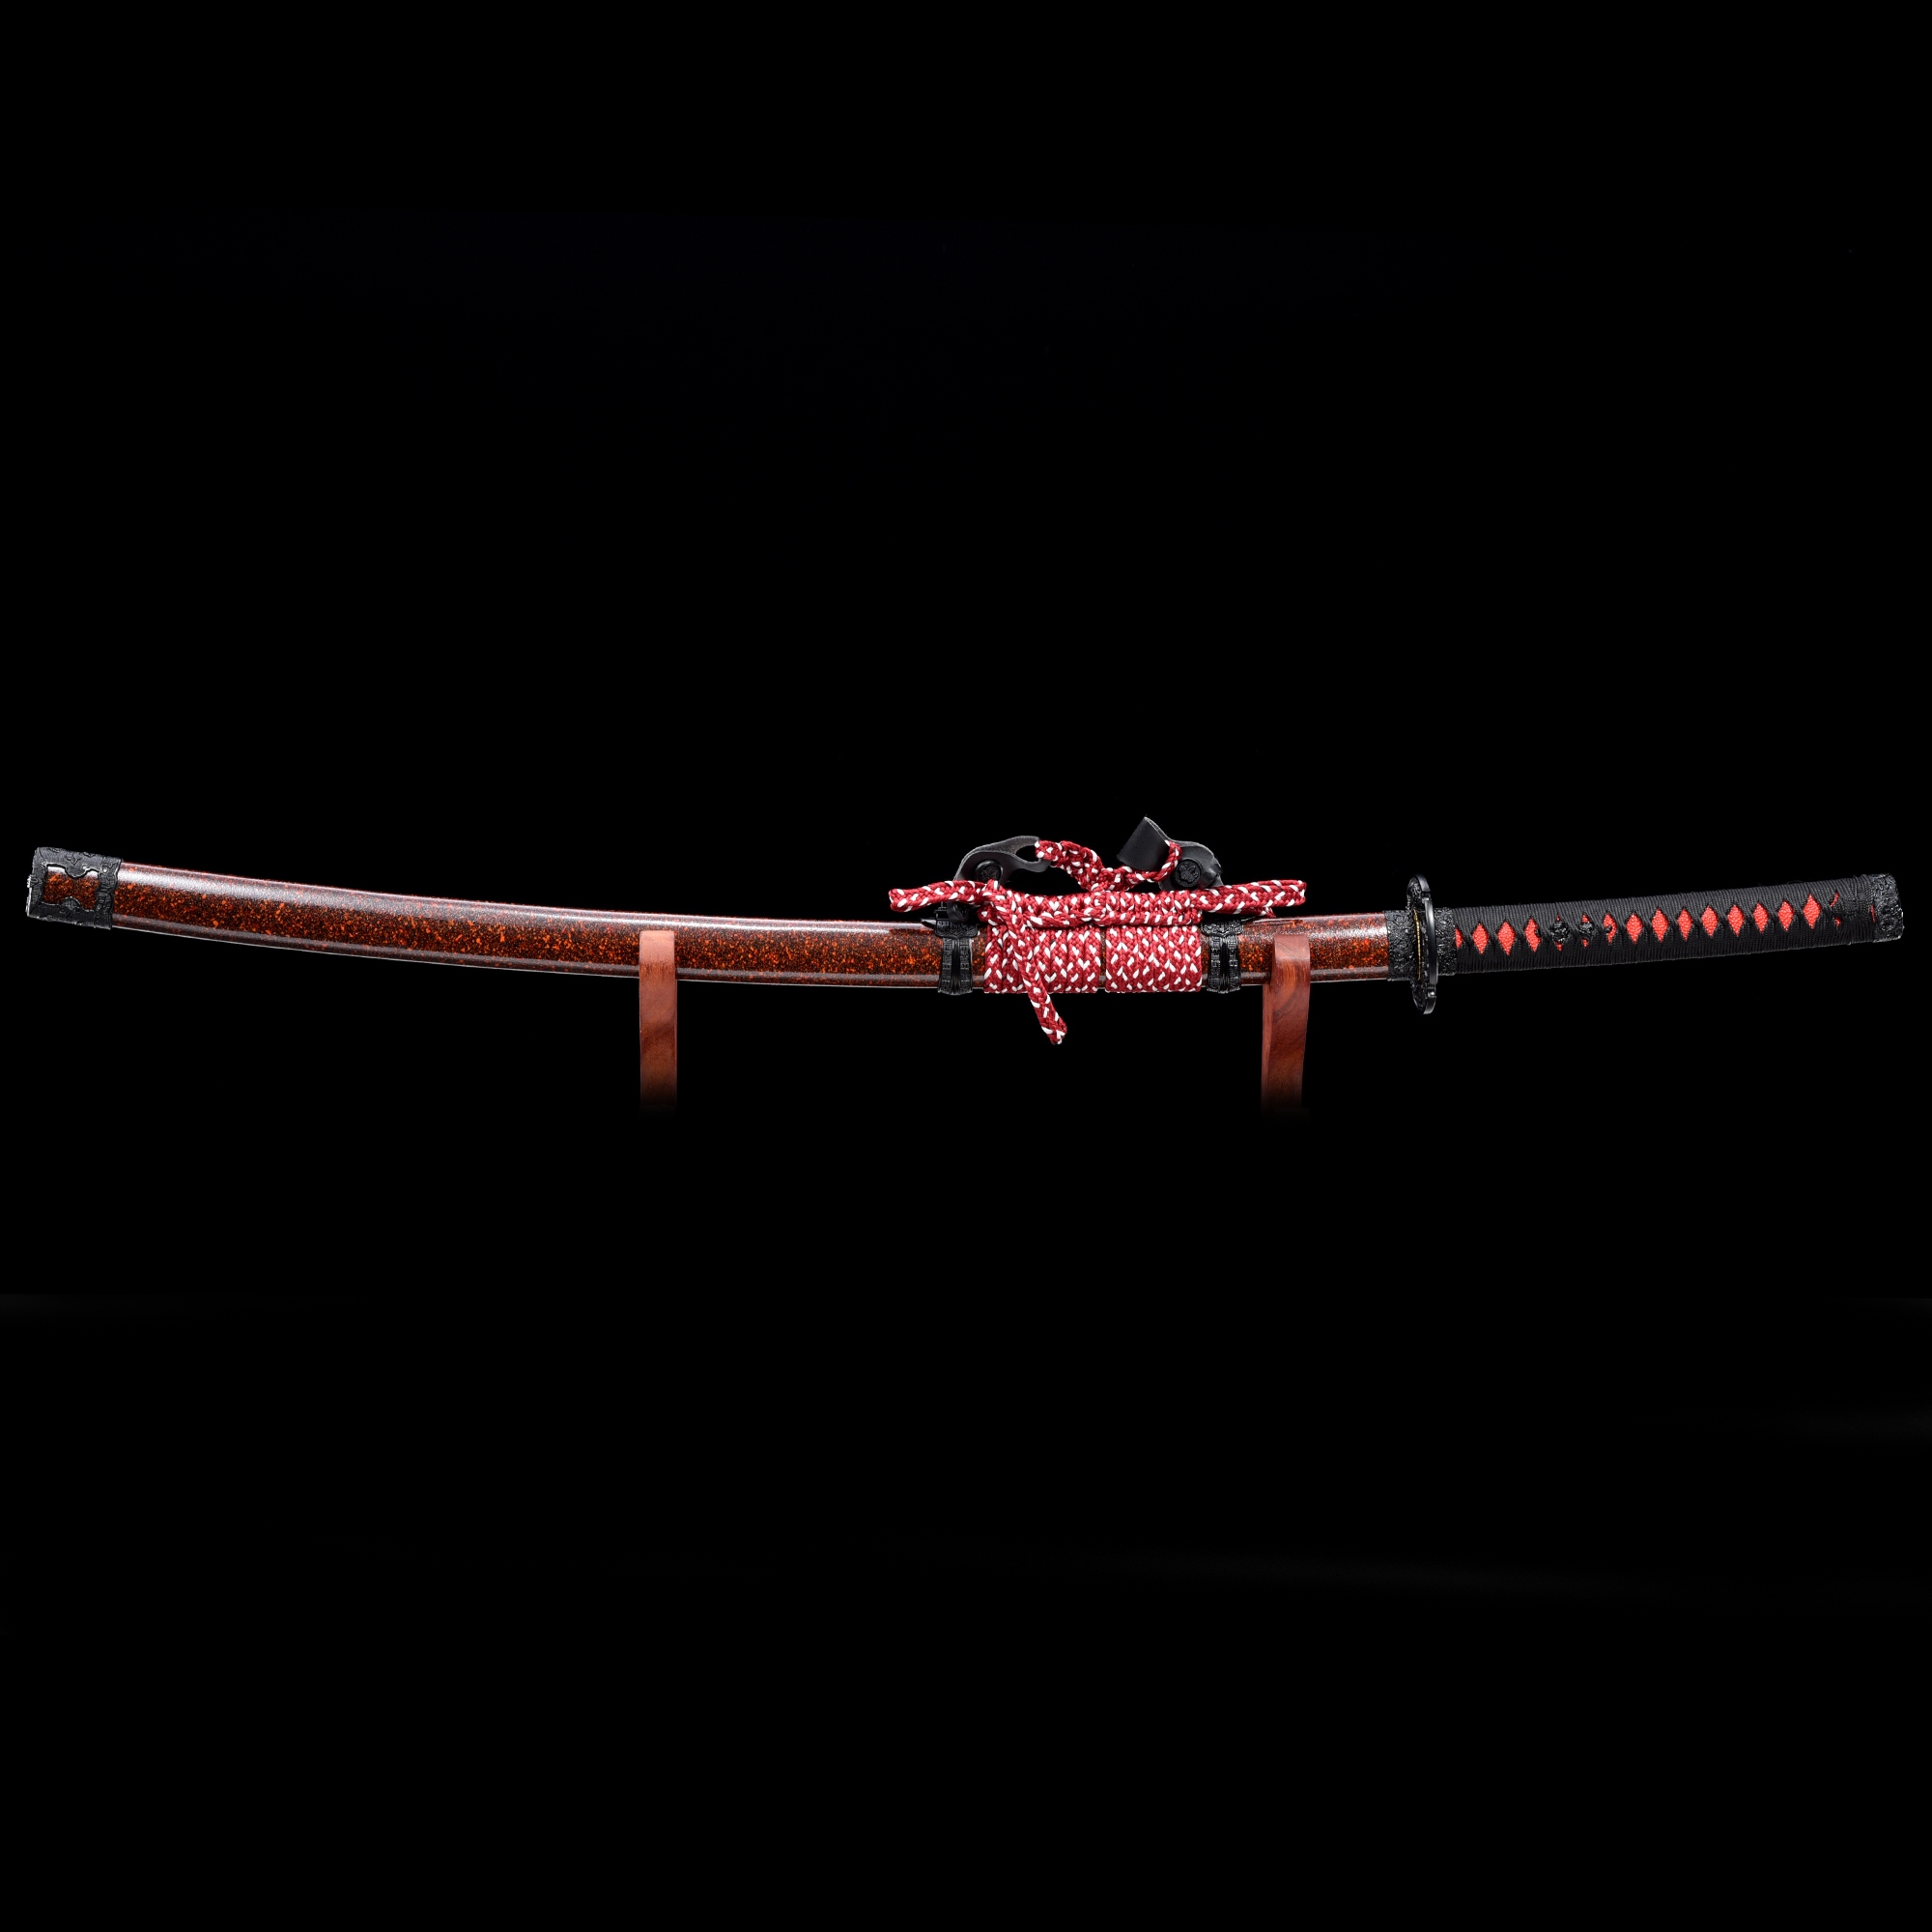 Black And Red Katana, Japanese Samurai Sword High Manganese Steel With ...